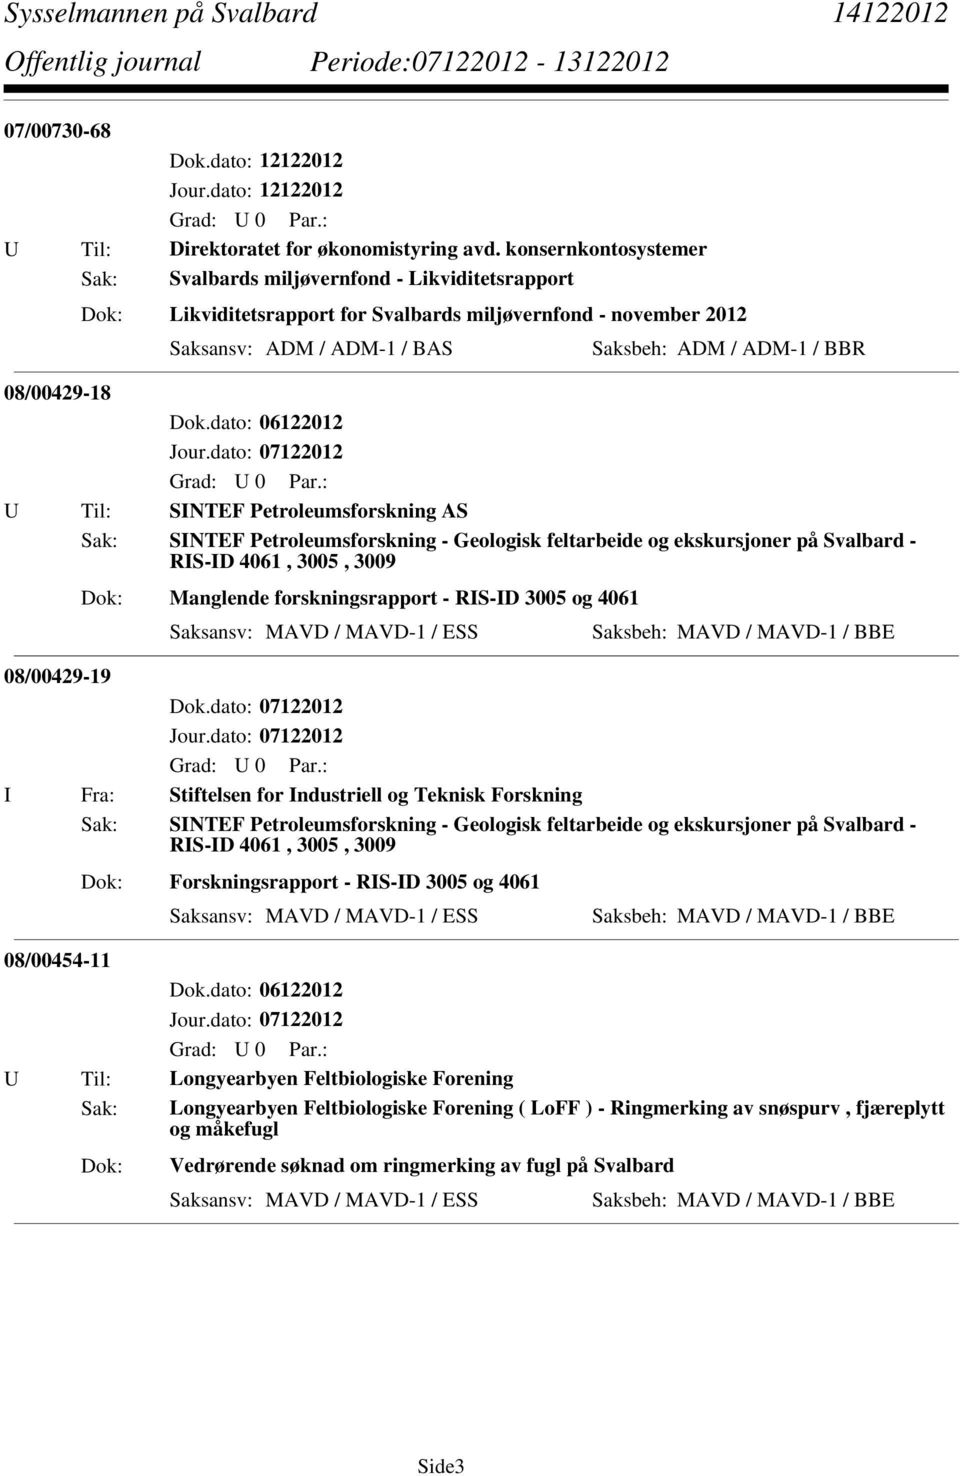 08/00429-18 U Til: SINTEF Petroleumsforskning AS Sak: SINTEF Petroleumsforskning - Geologisk feltarbeide og ekskursjoner på Svalbard - RIS-ID 4061, 3005, 3009 Manglende forskningsrapport - RIS-ID